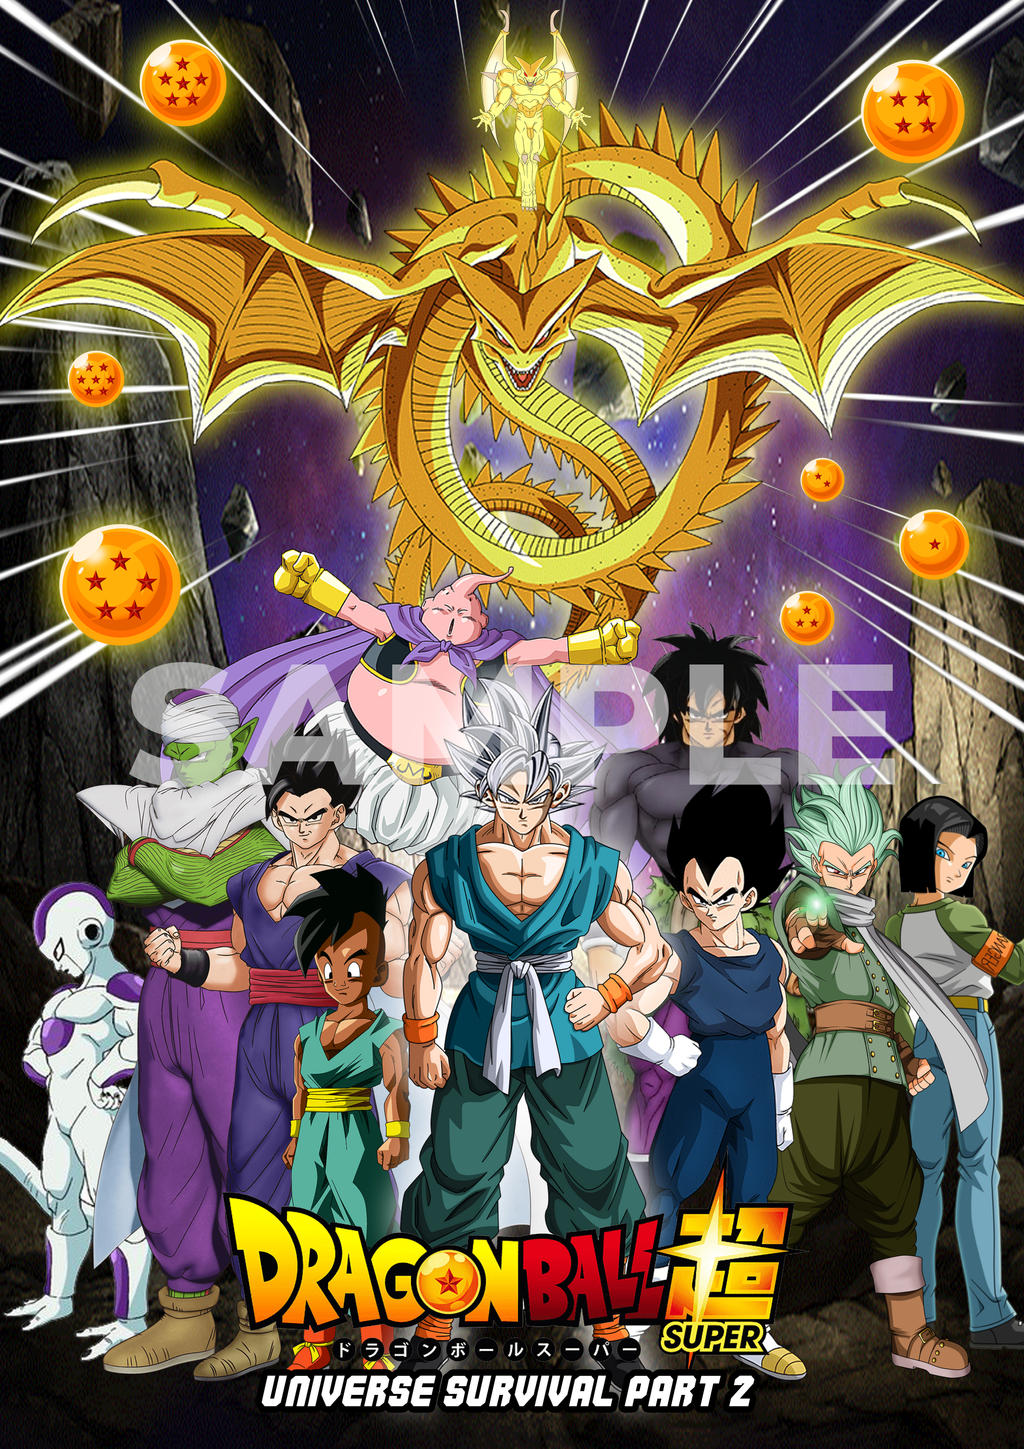 Dragon Ball Super Super Hero Arc by AriezGao on DeviantArt